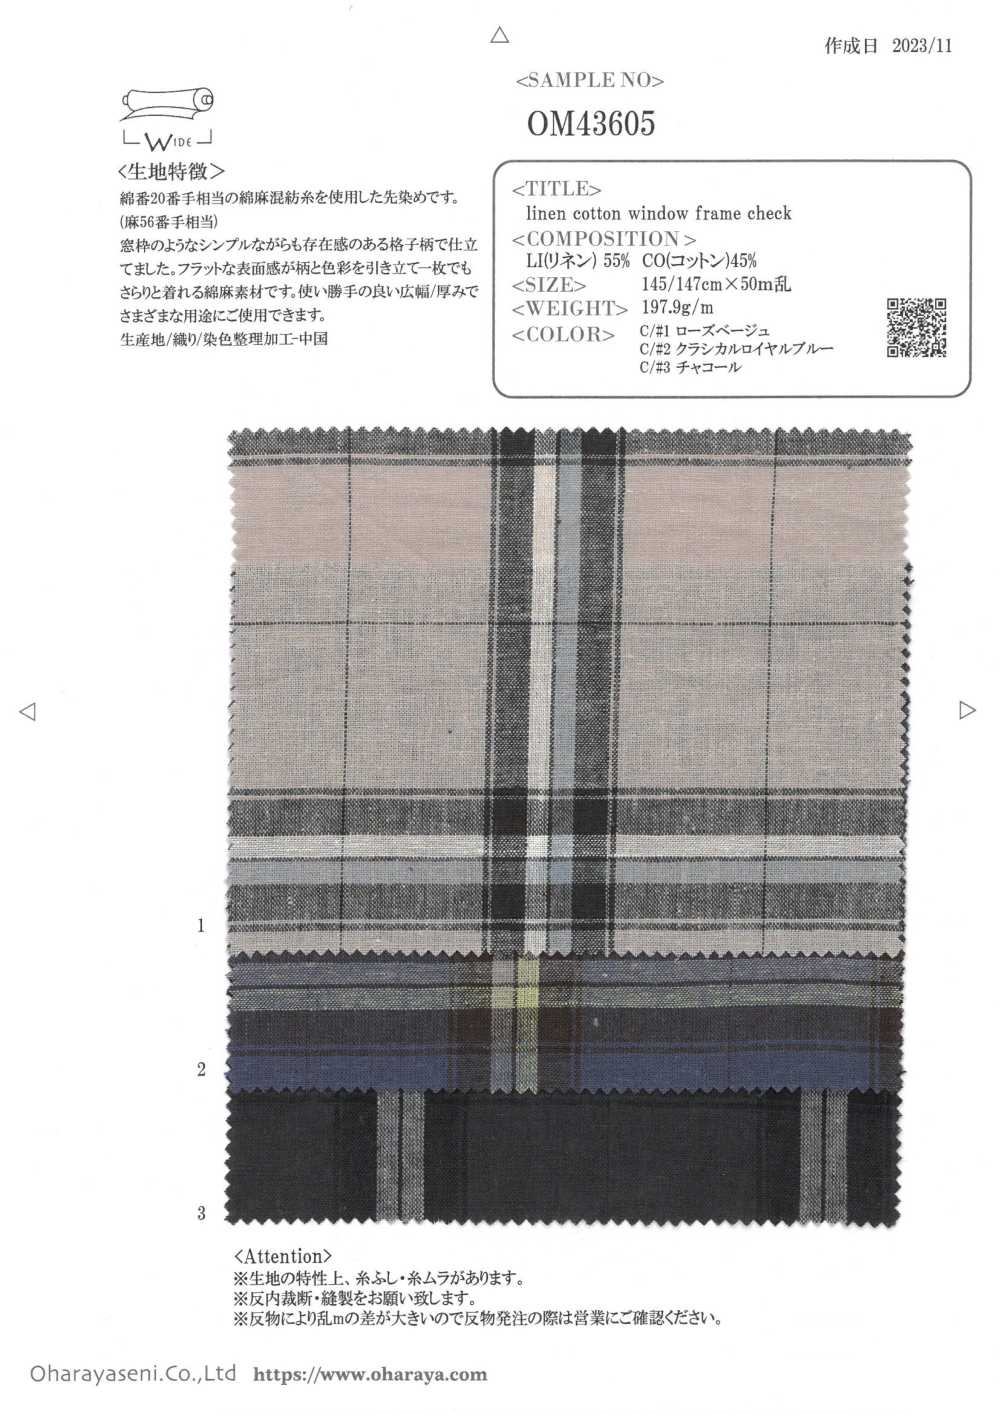 OM43605 Leinen-Baumwolle Fensterrahmen Karo[Textilgewebe] Oharayaseni